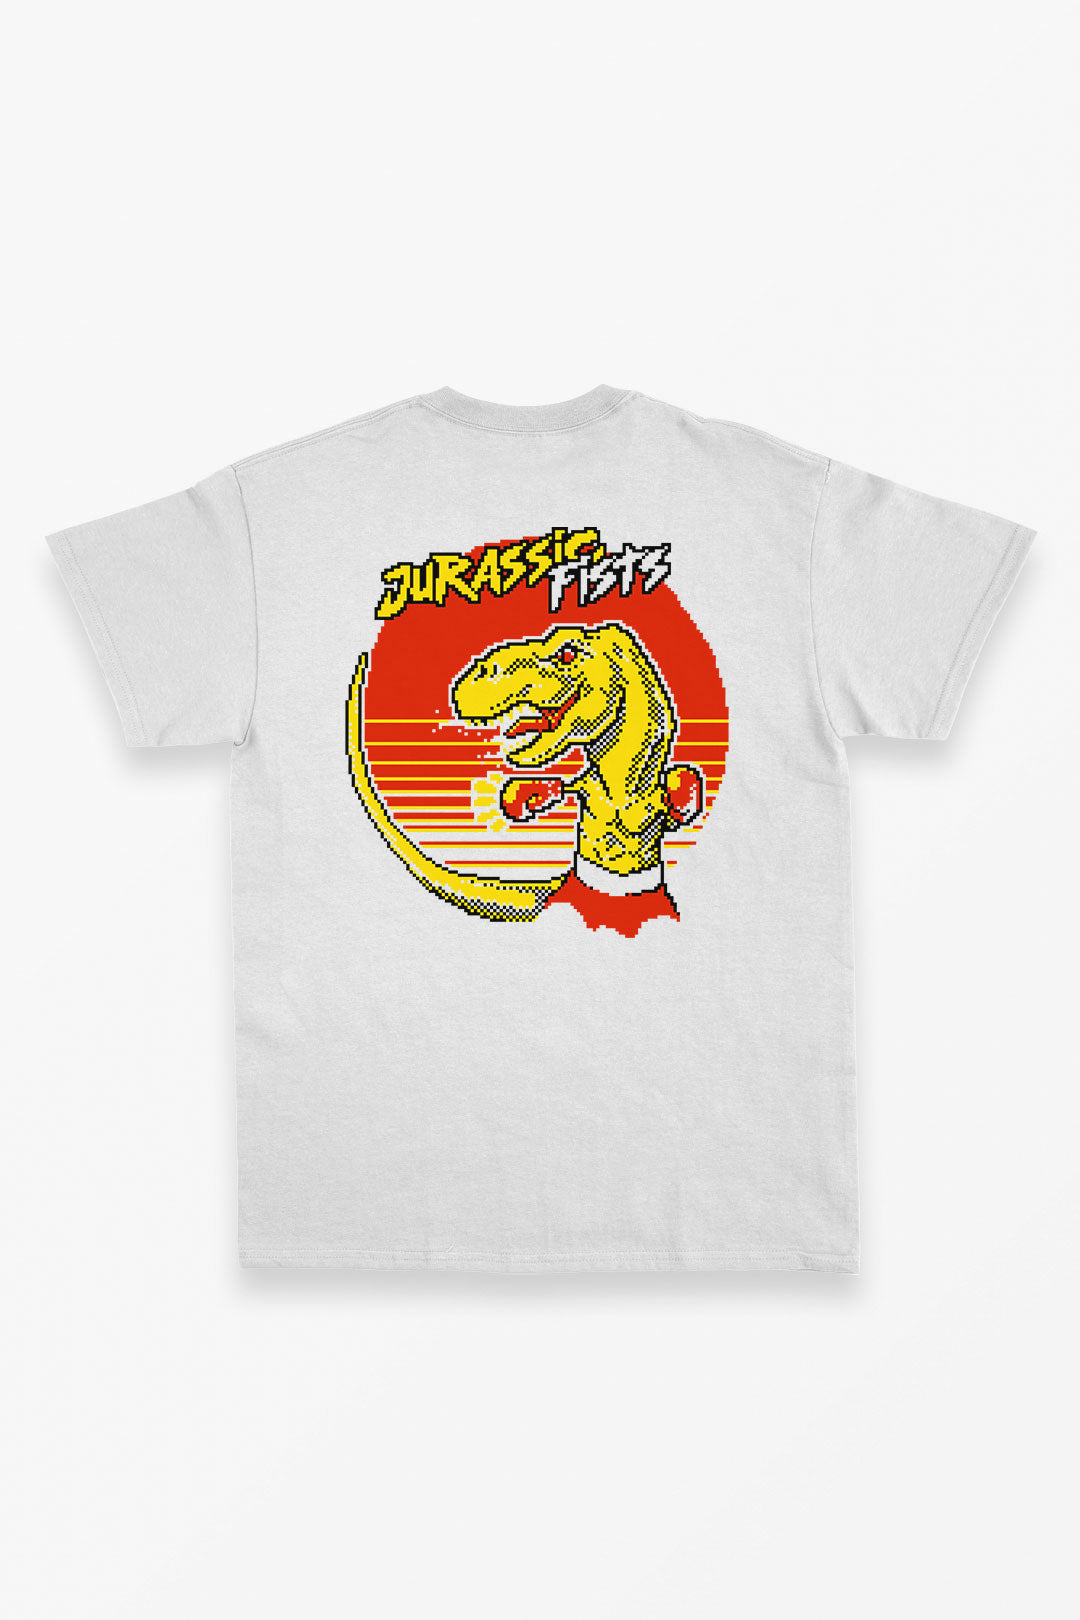 T-Shirt Jurassic